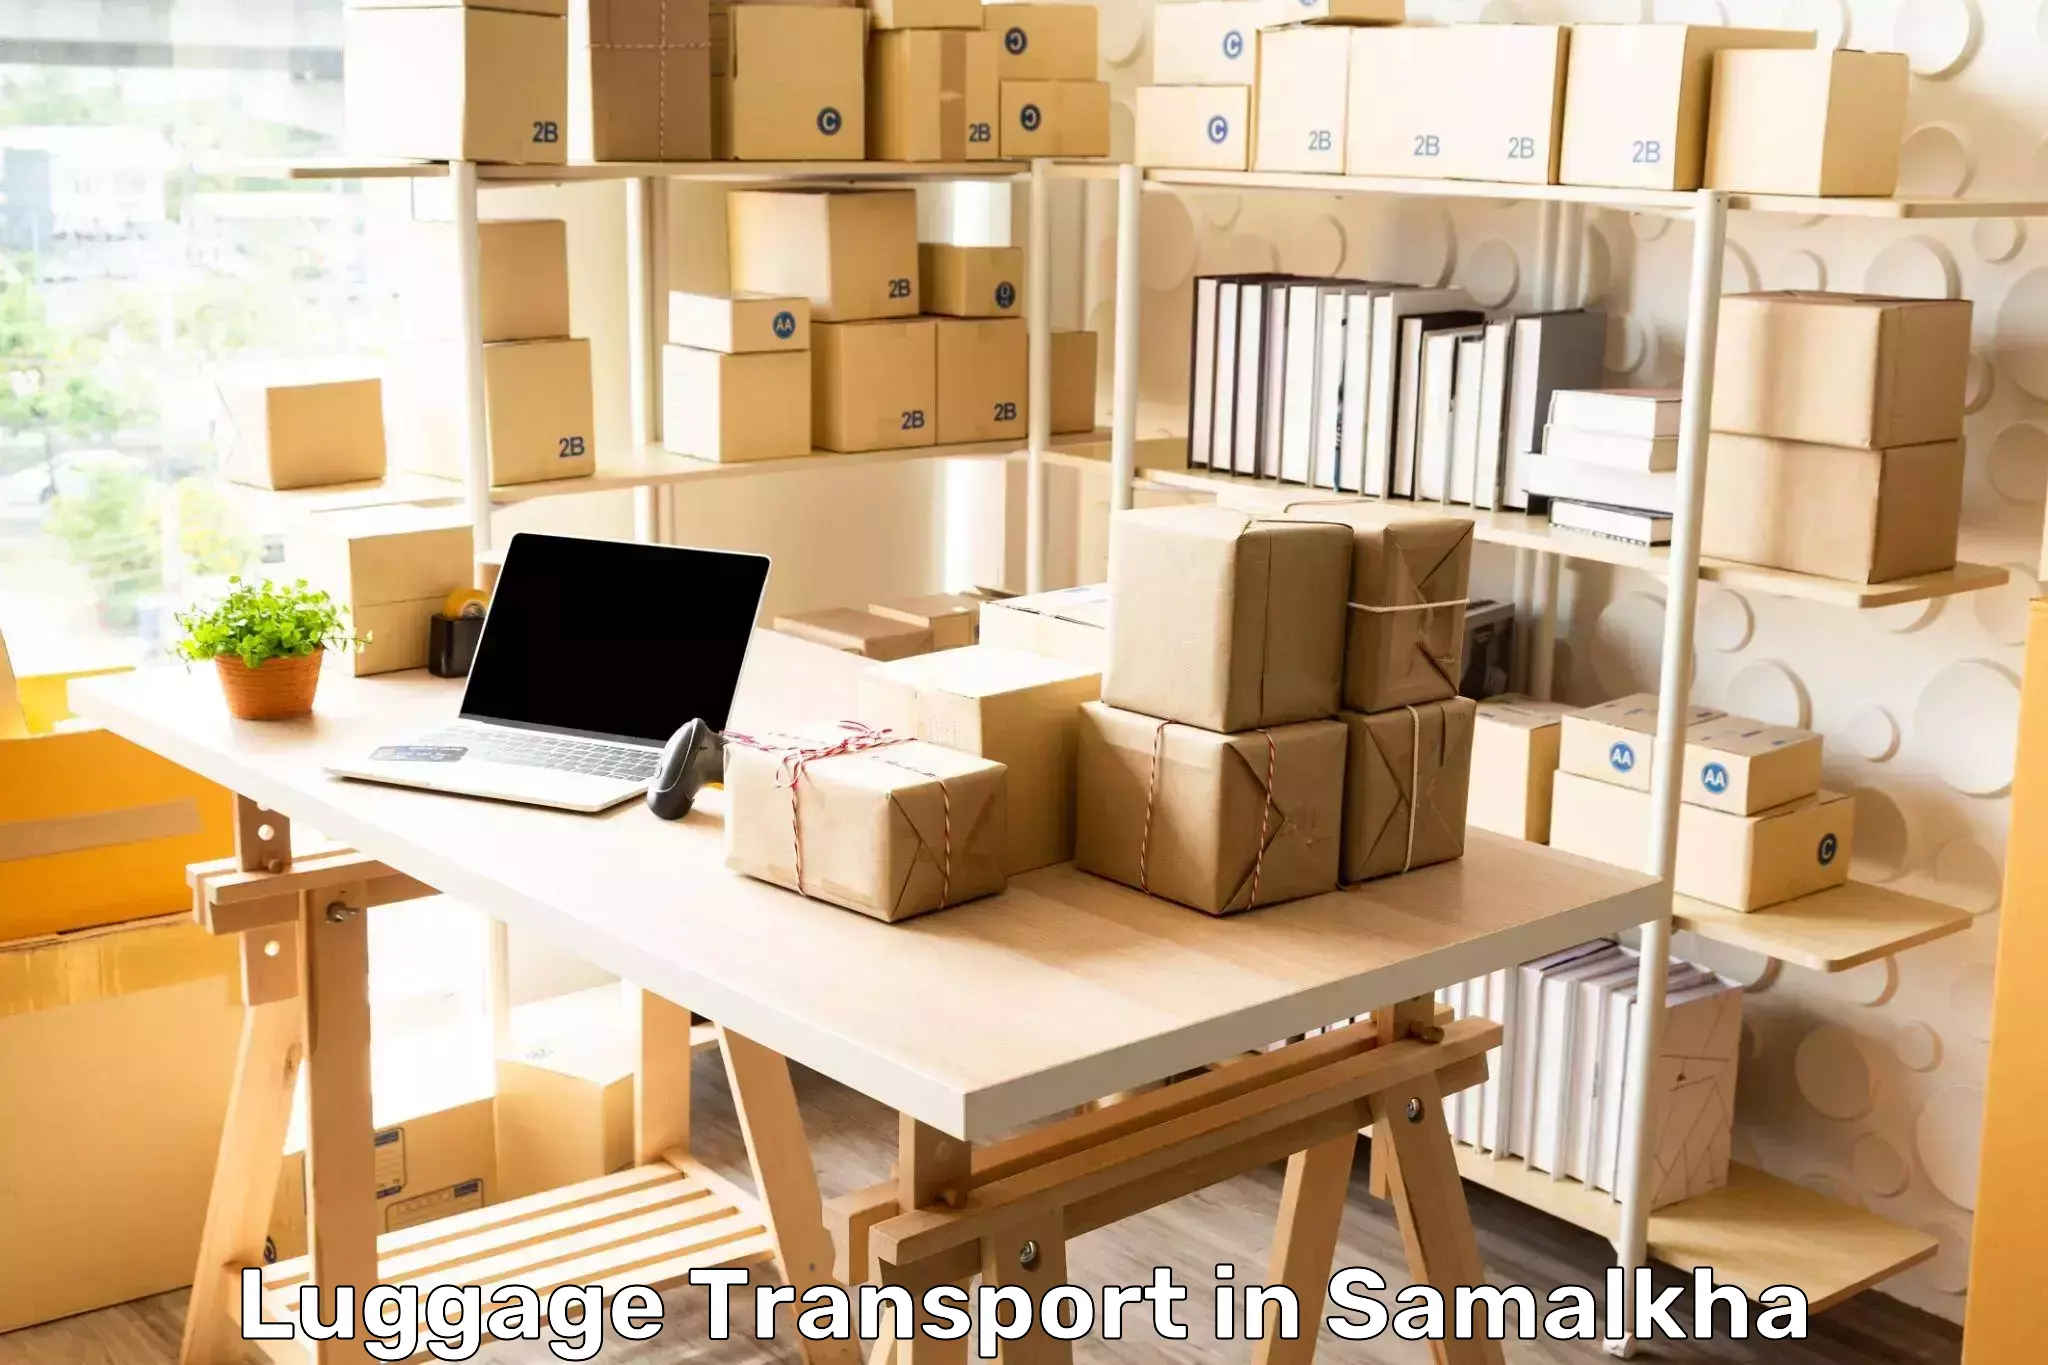 Multi-destination luggage transport in Samalkha